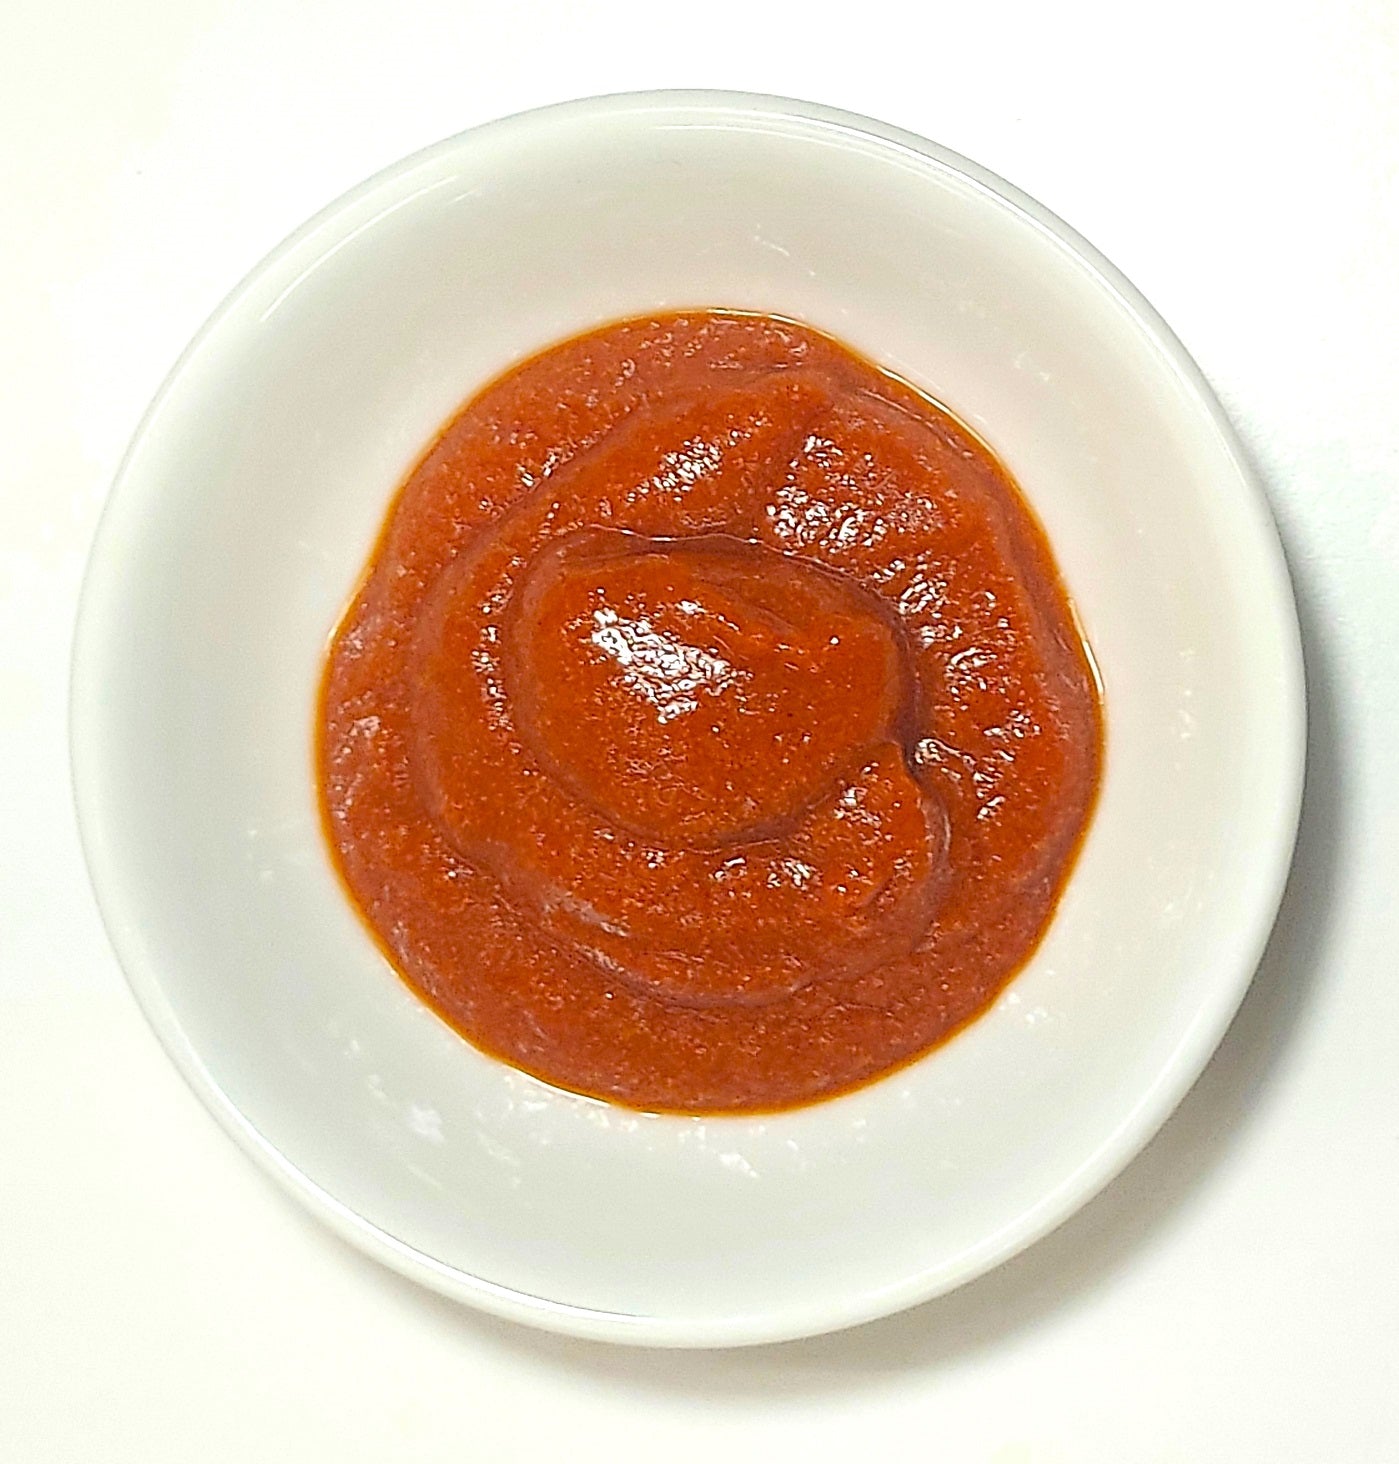 Range Tasmania tomato mustard sauce served in a small white dish